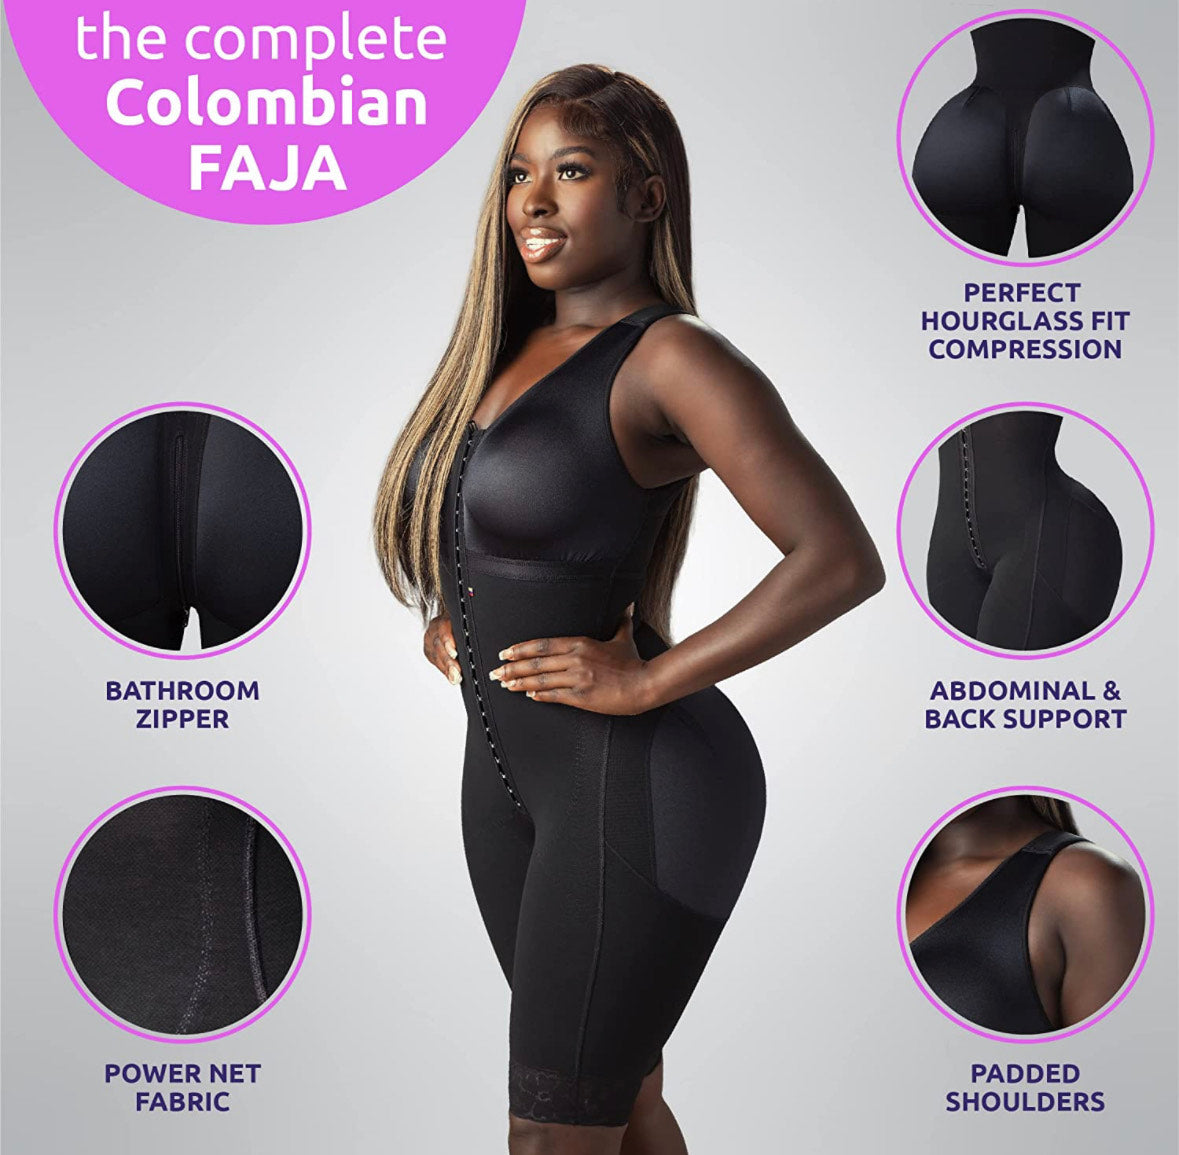 Adjustable Woman Fajas Colombian Slimming Girdles Flat Stomach